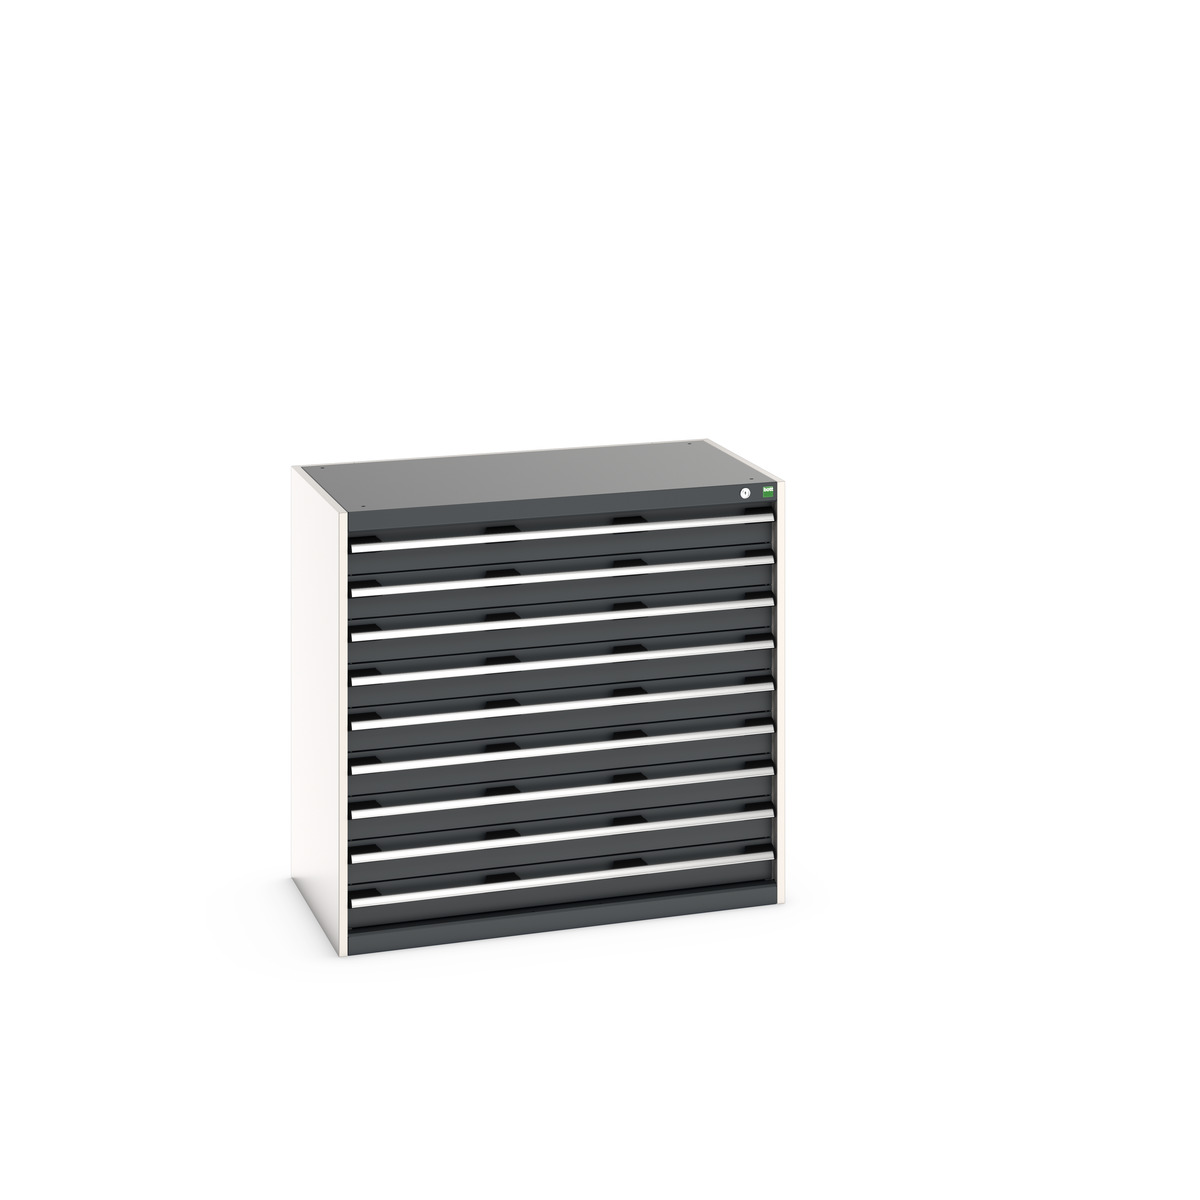 40021036. - cubio drawer cabinet